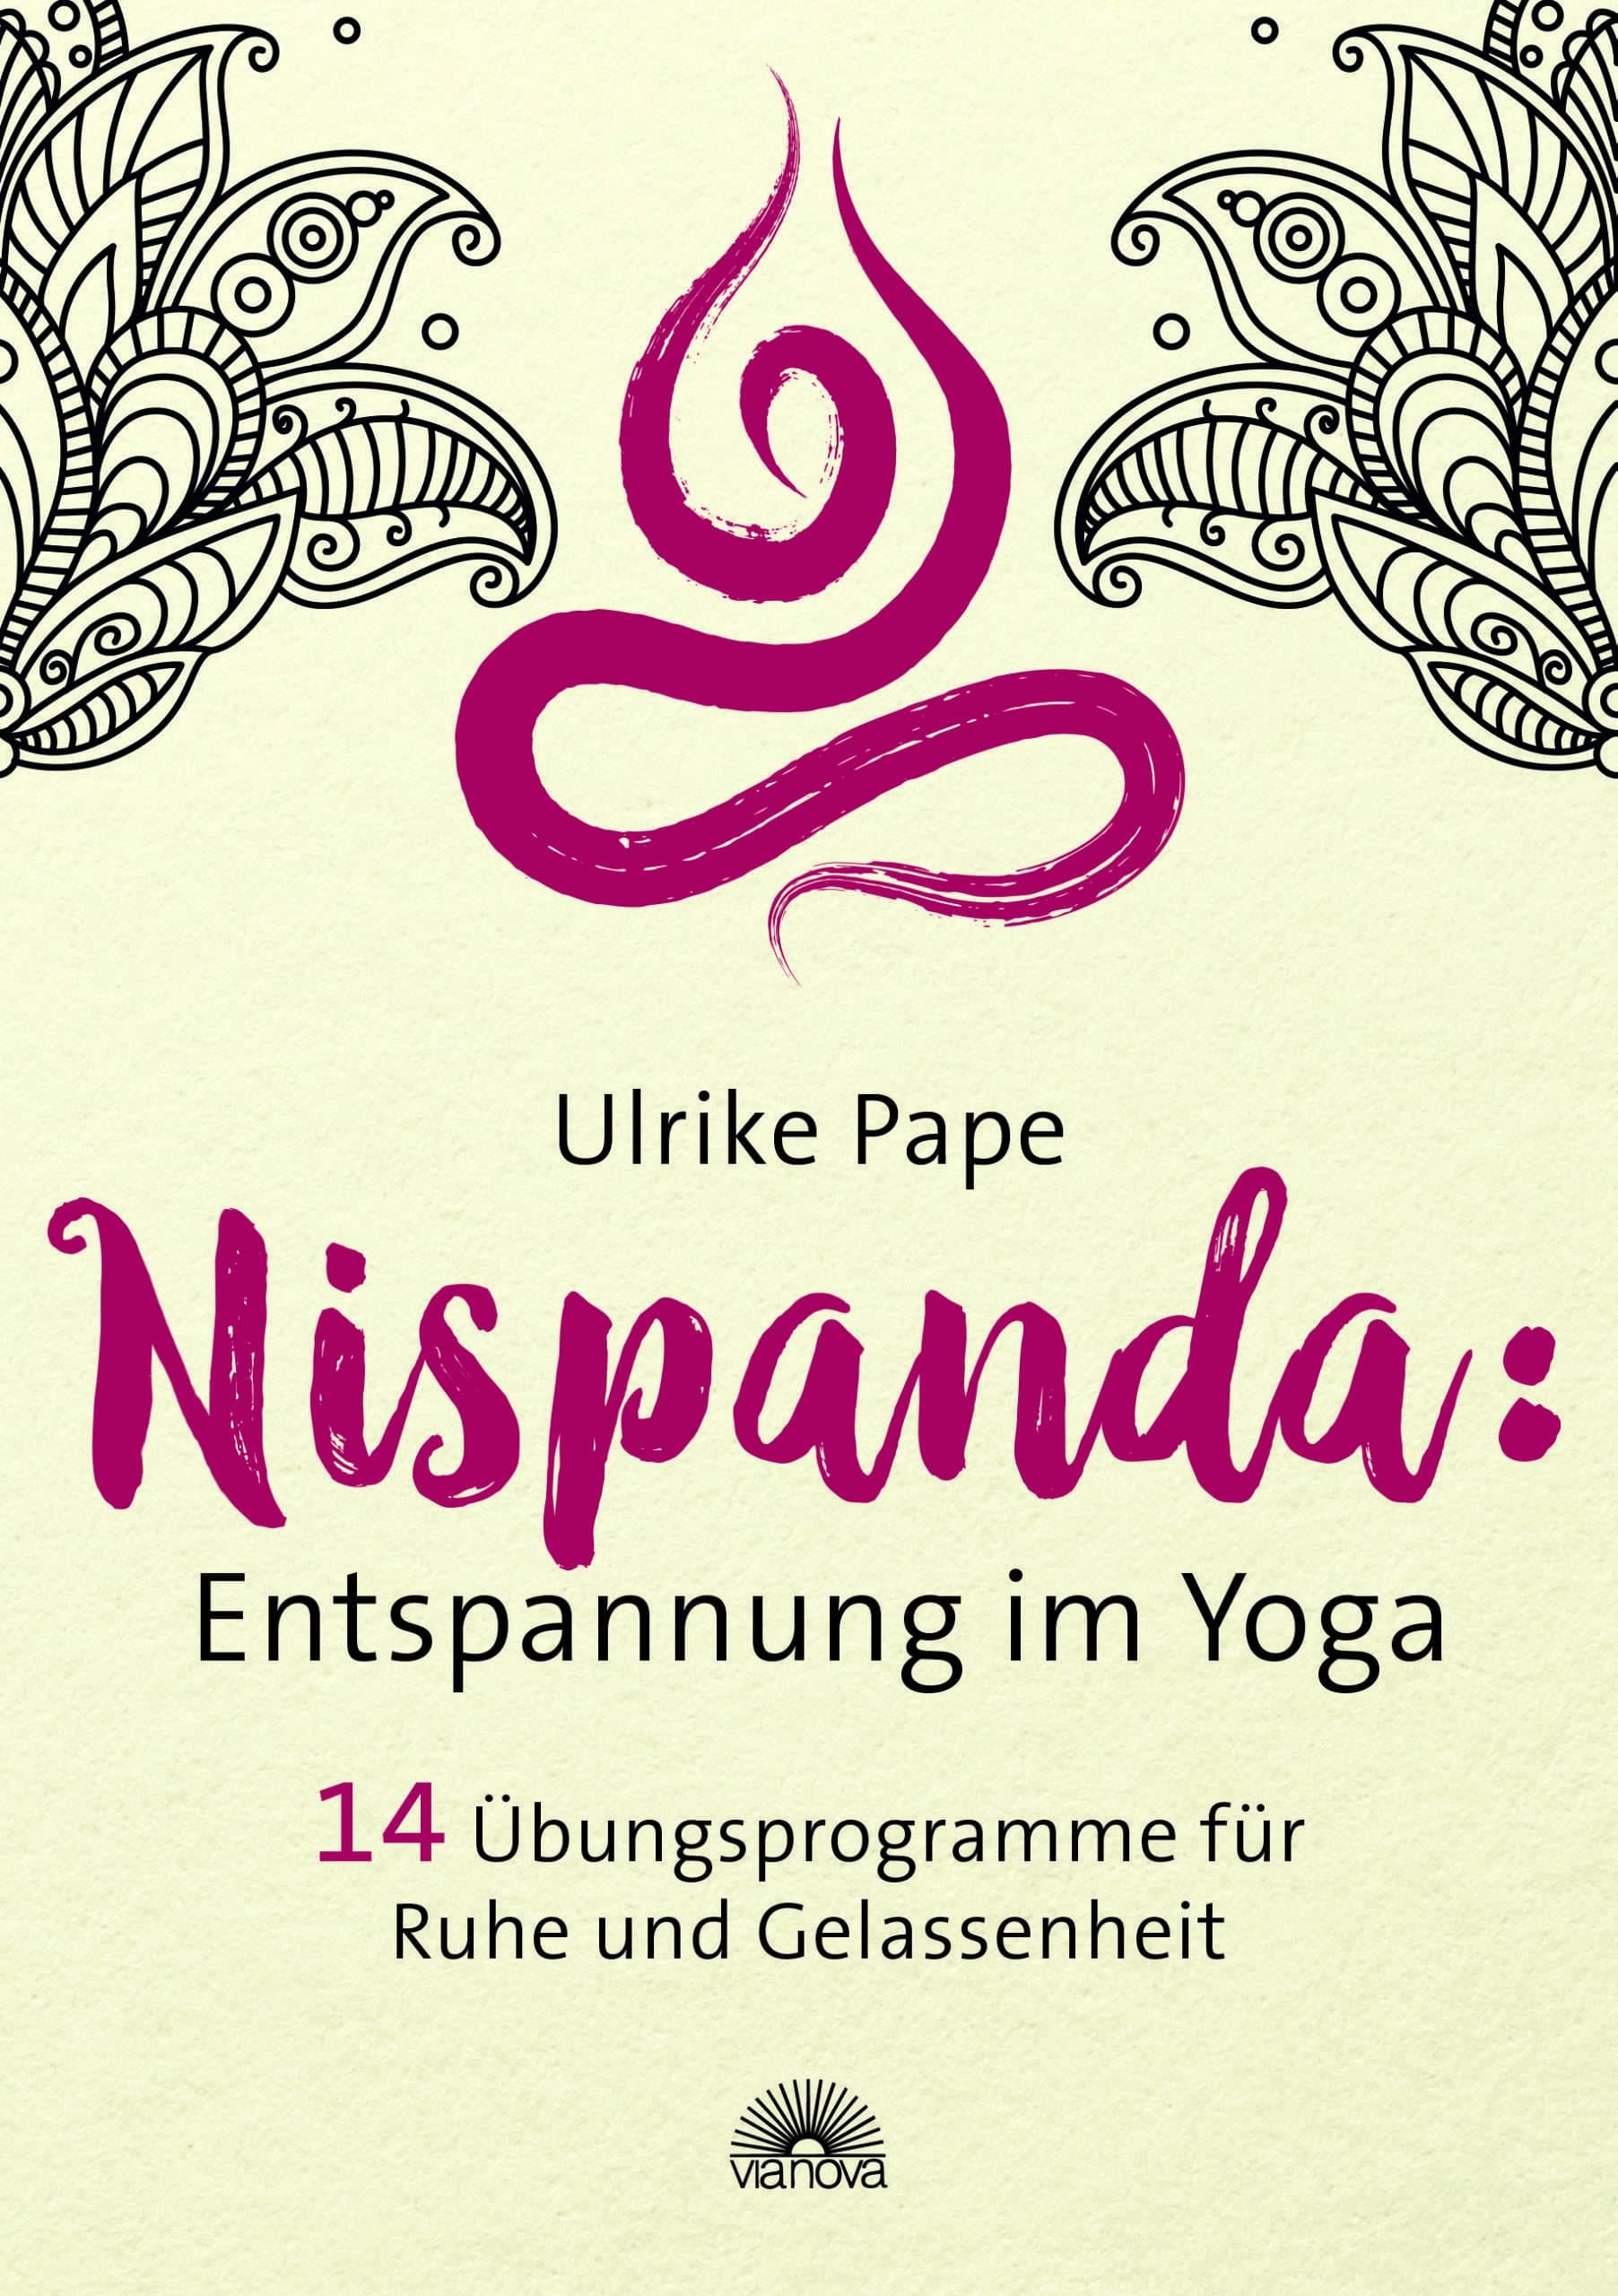 "Nispanda: Entspannung im Yoga" von Ulrike Pape © vianova Yogannetteblog.de